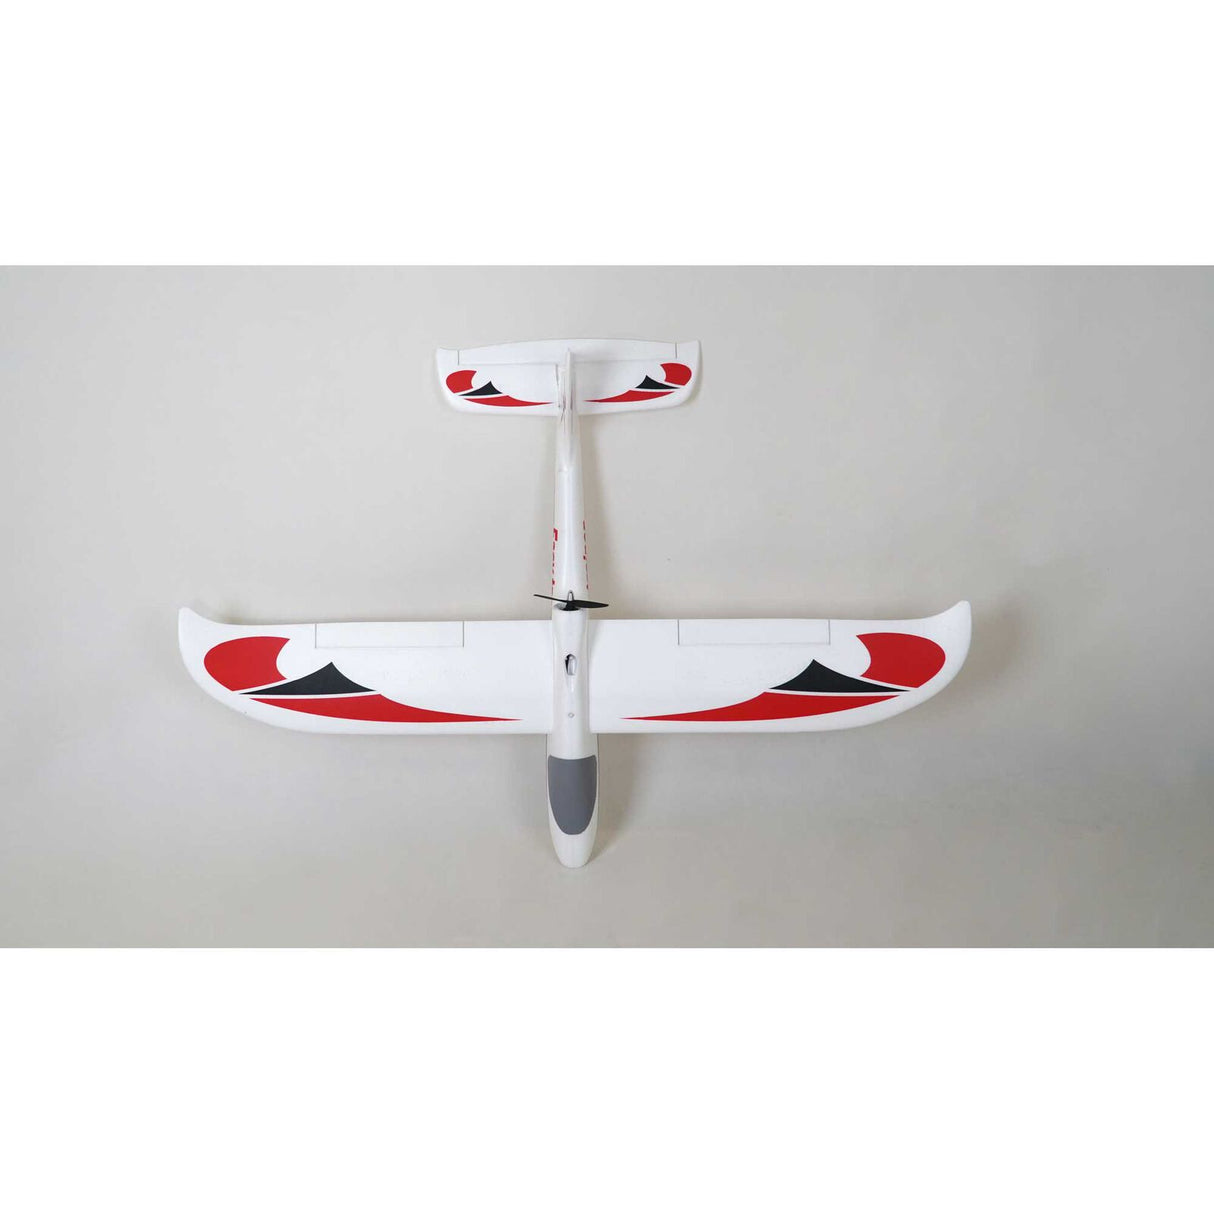 FMS Easy Trainer V2 Glider/Trainer RC Plane (1280mm / RTF) | RC-N-Go